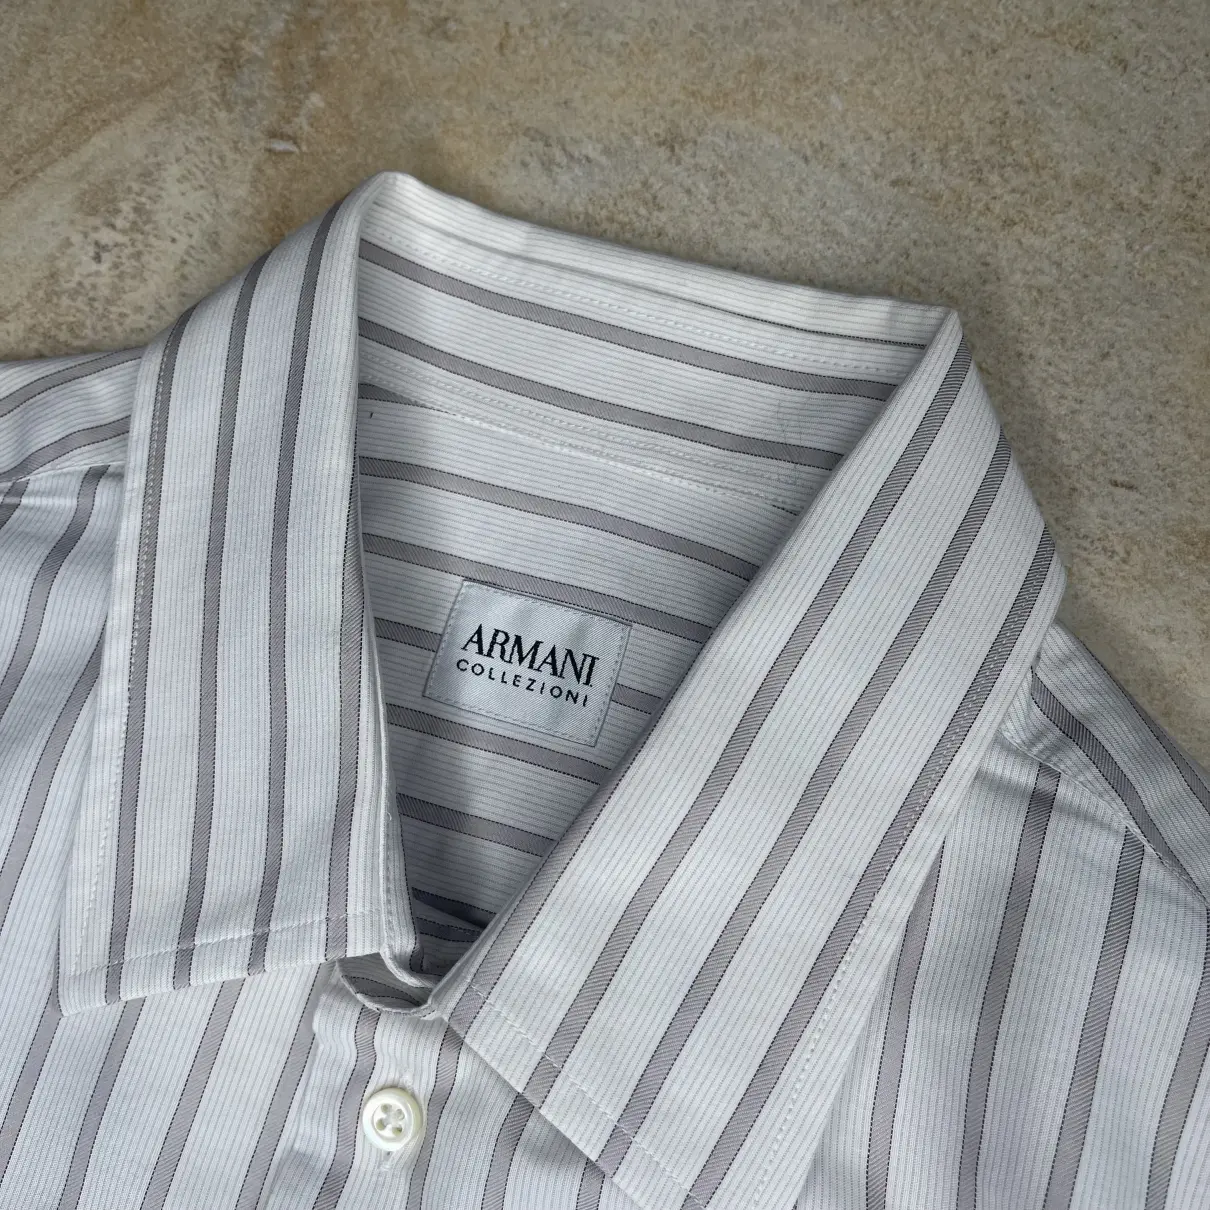 Buy Armani Collezioni Shirt online